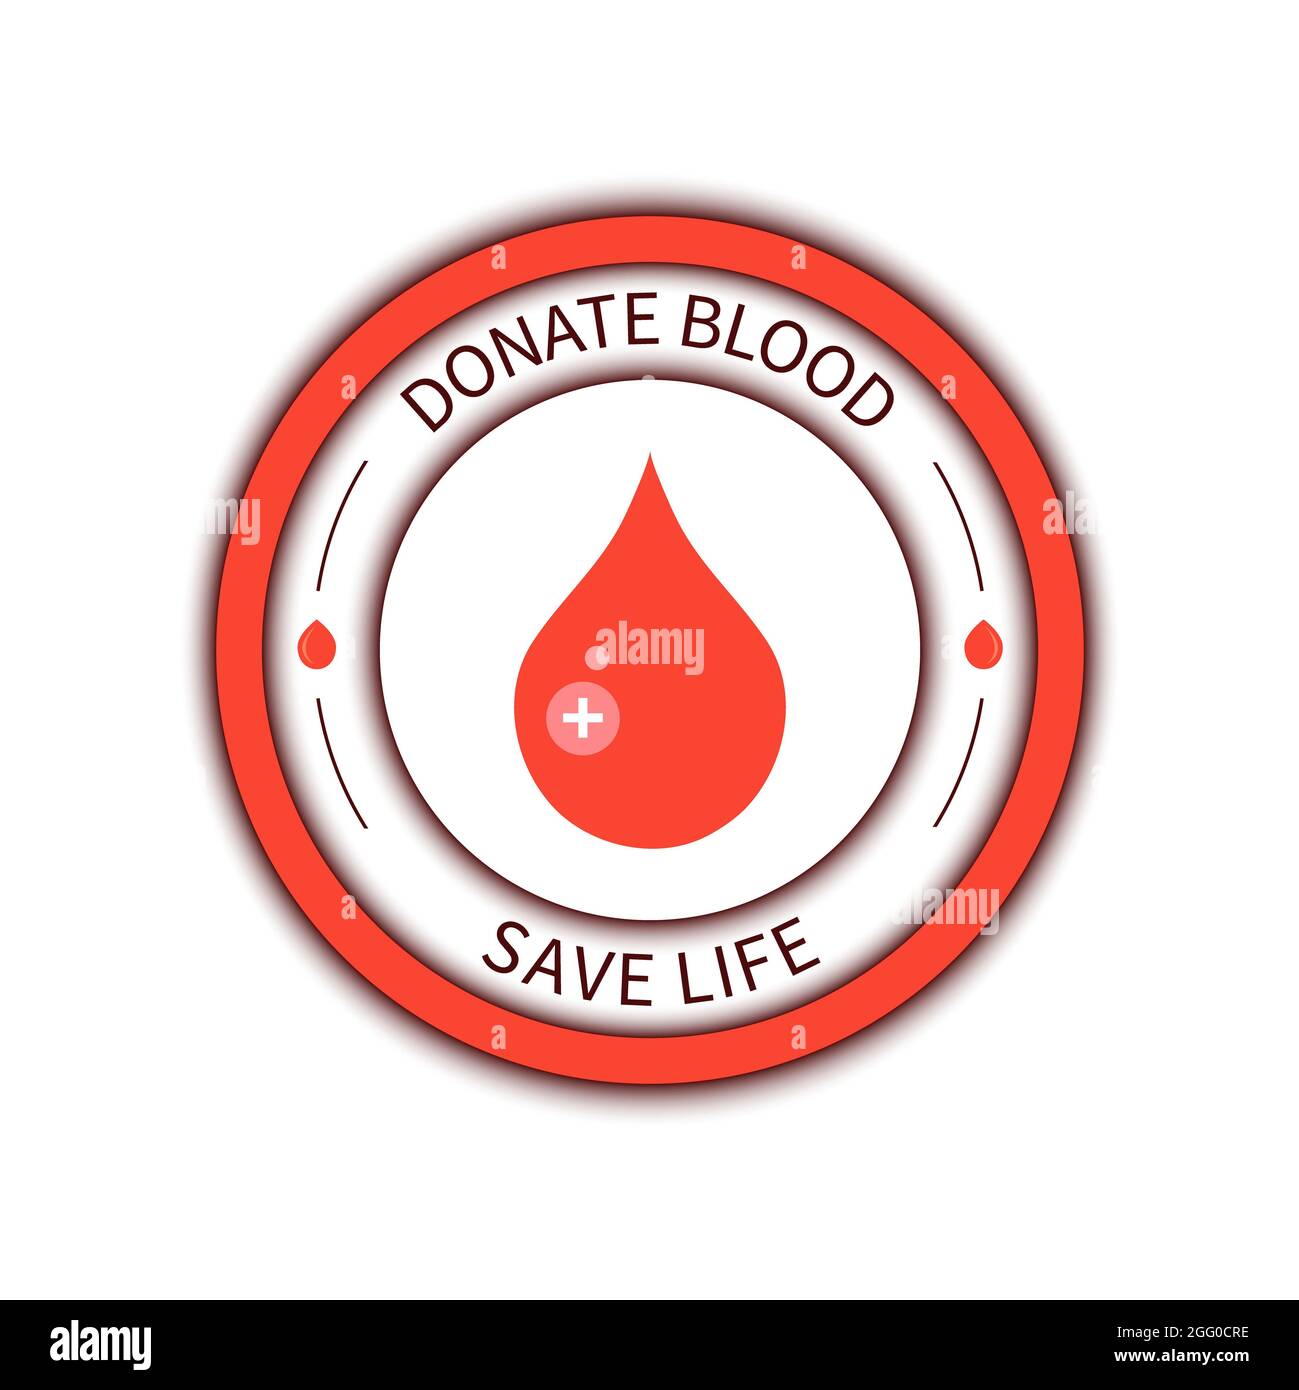 Blood donation, conceptual illustration. Stock Photo